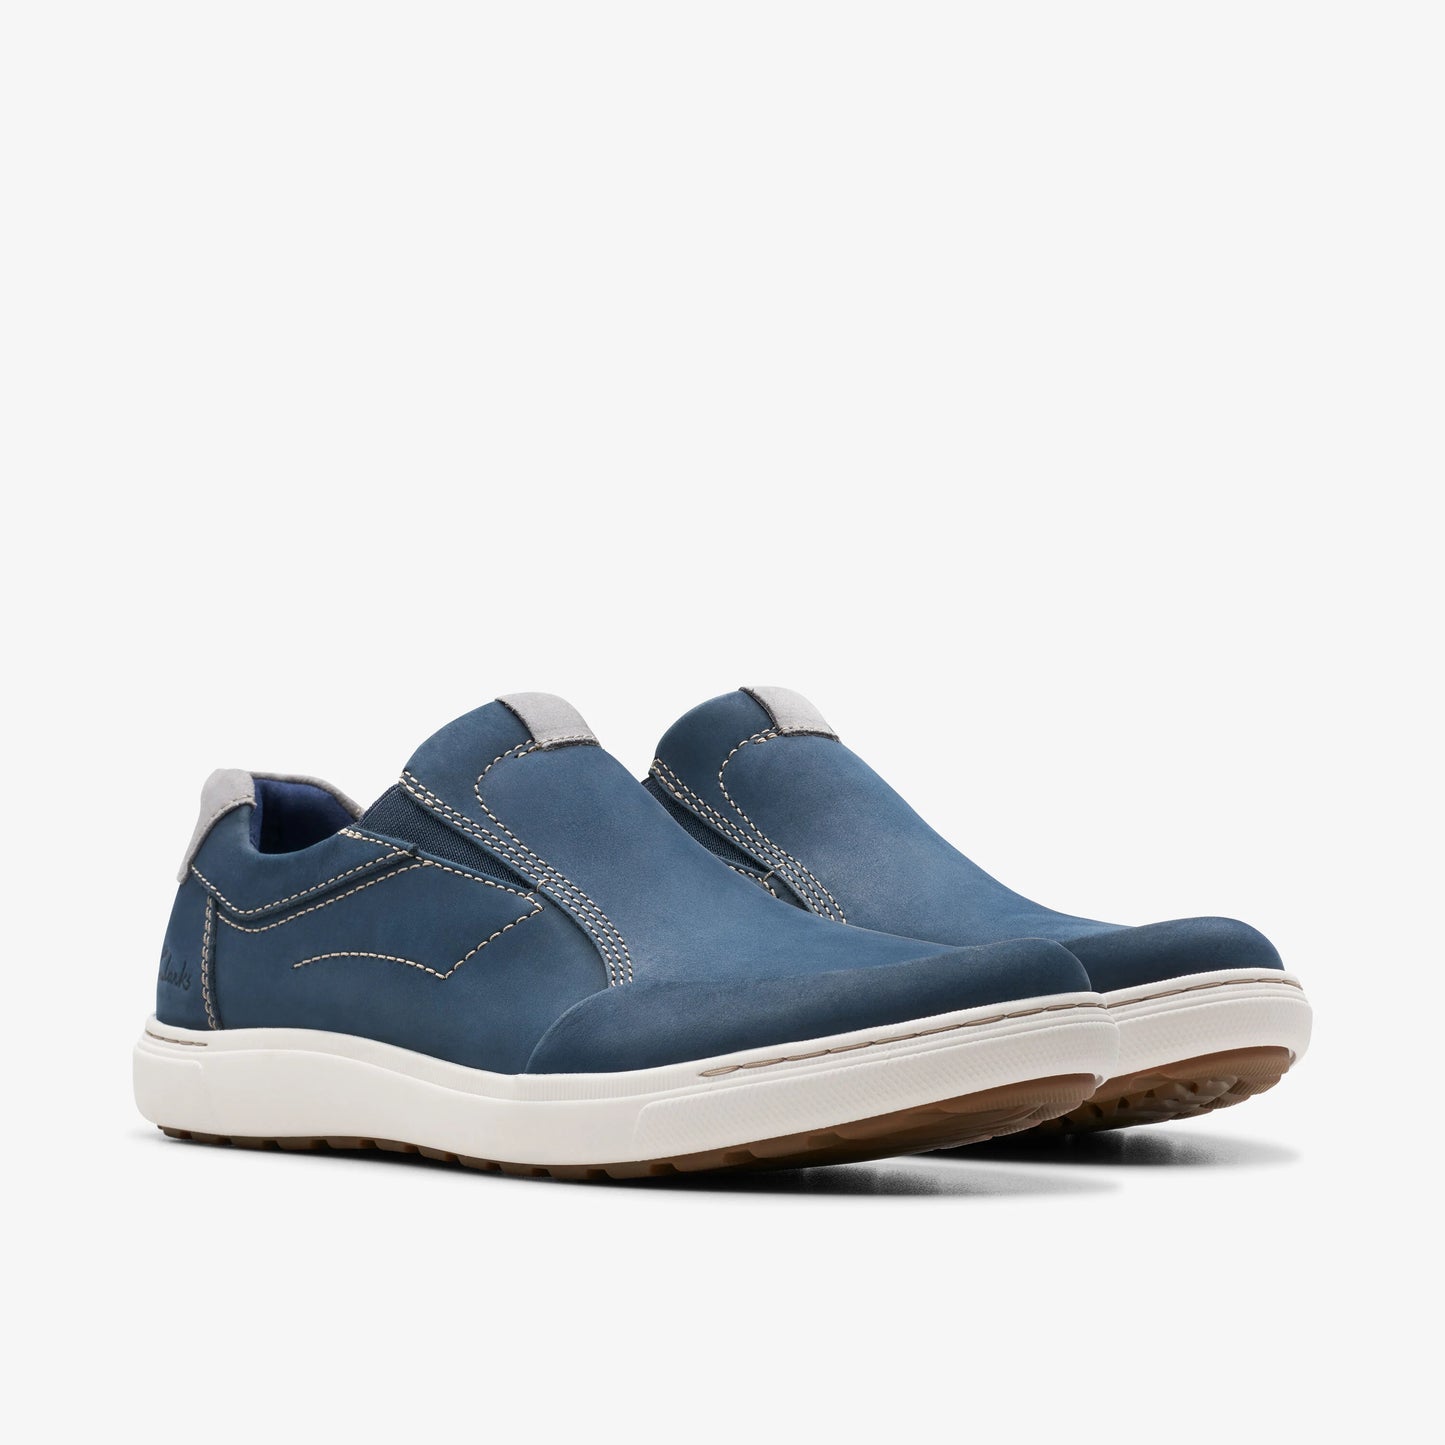 CLARKS | أحذية غير رسمية للرجال | MAPSTONE STEP NAVY NUBUCK | أزرق